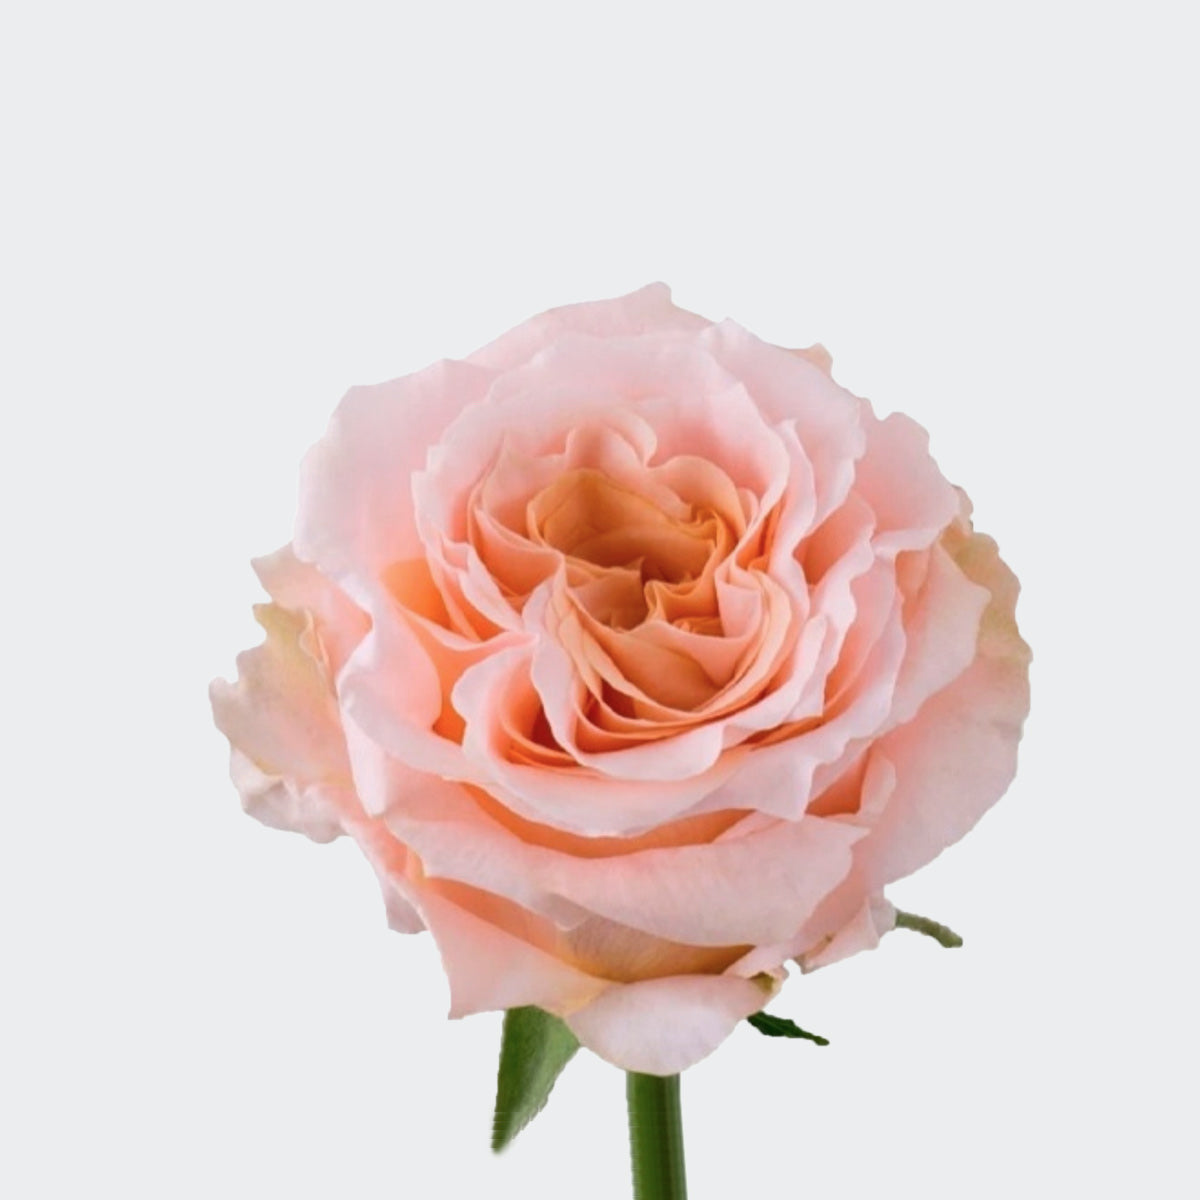 The Peach Rose